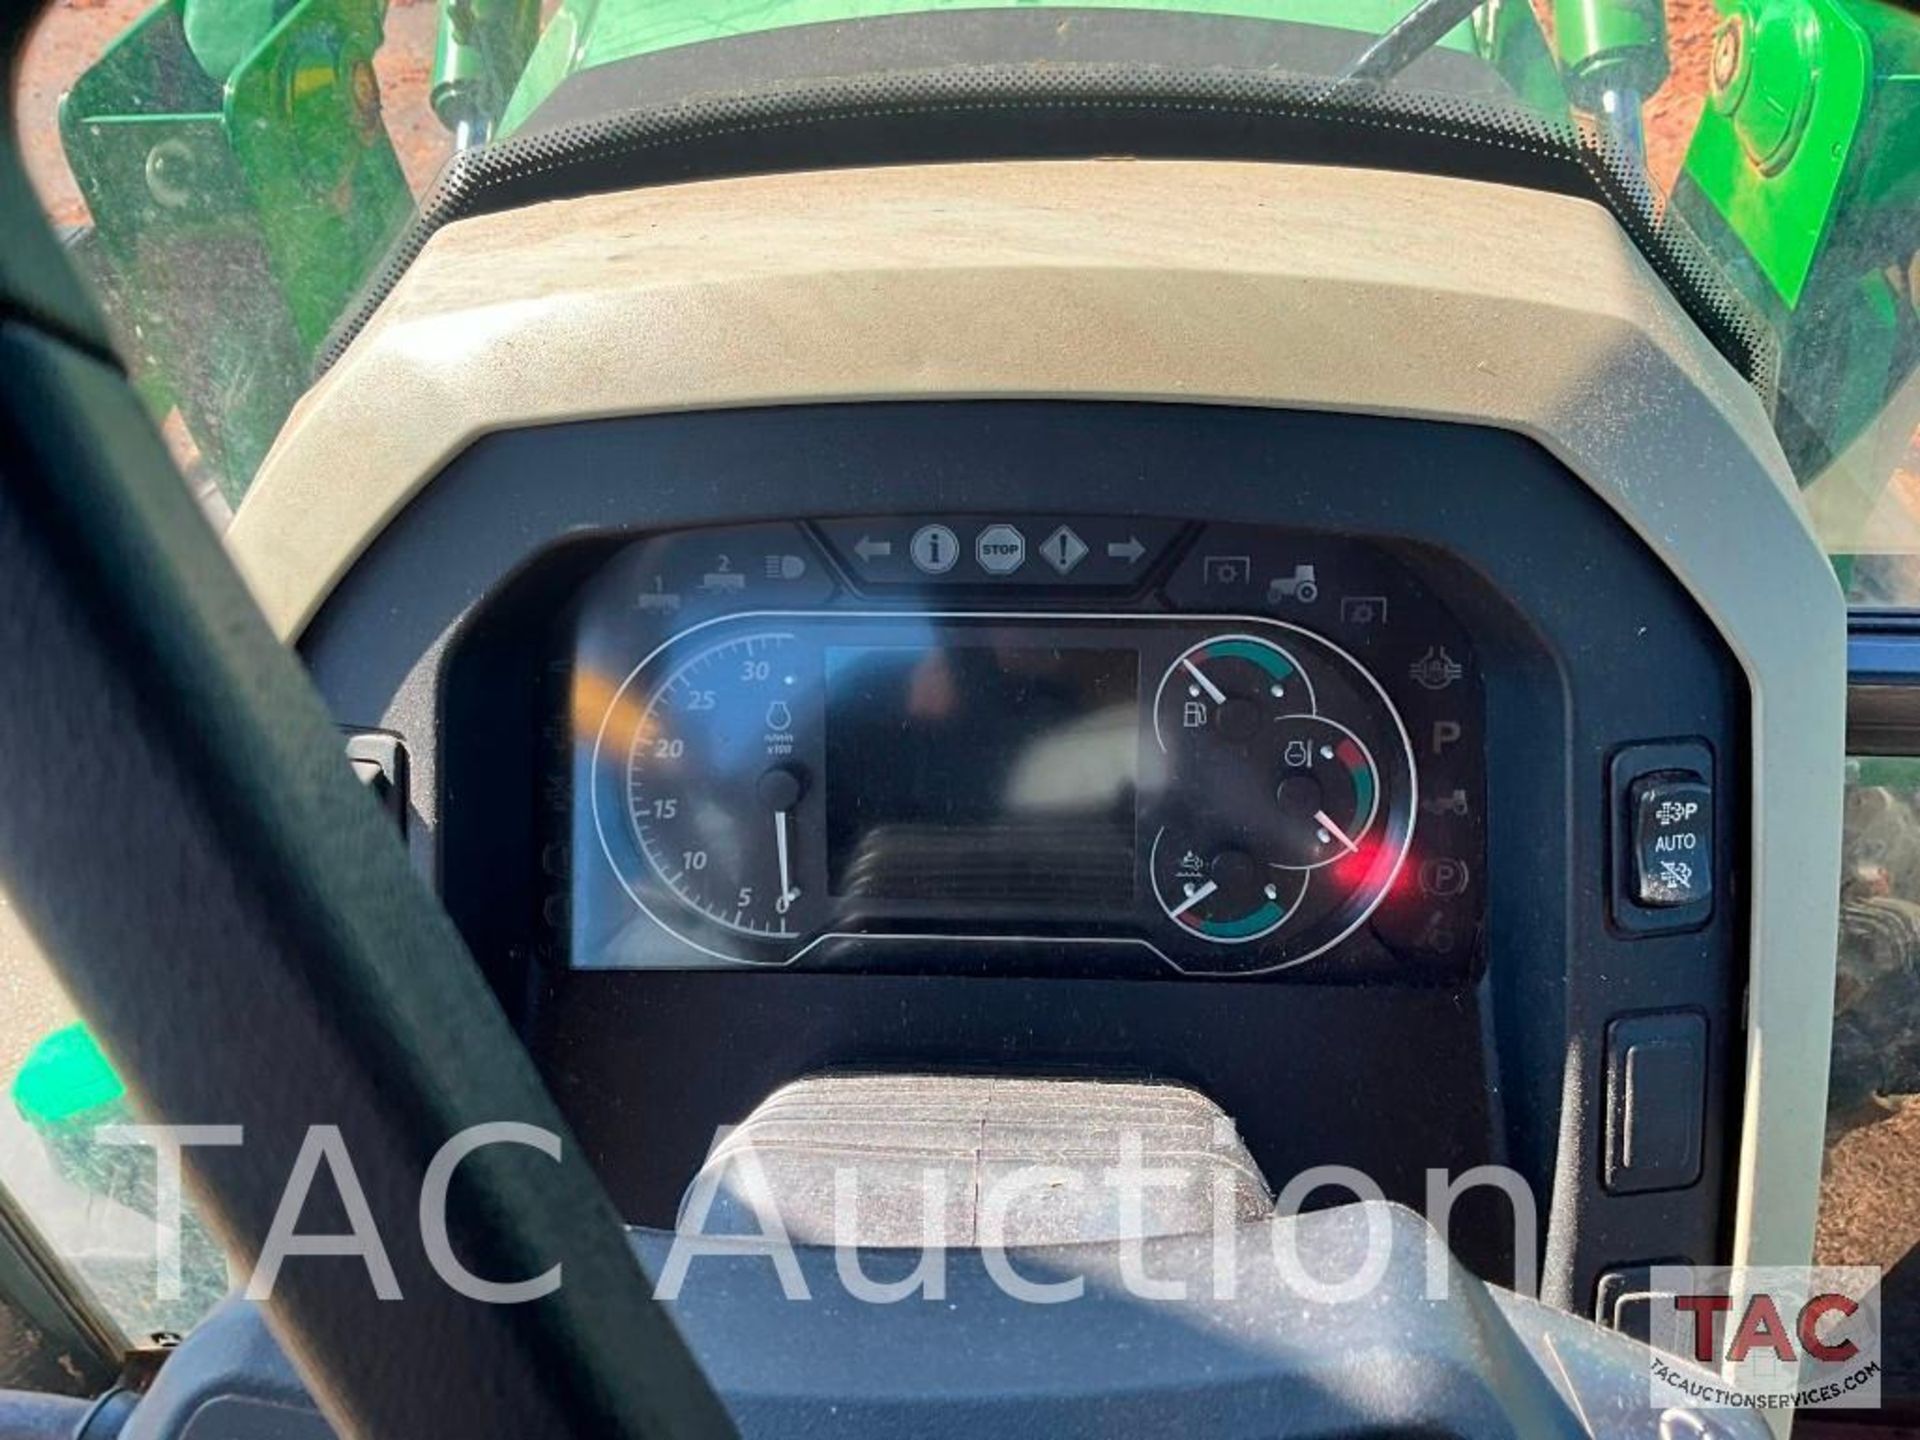 2018 John Deere 5100E 4x4 Tractor - Image 54 of 76